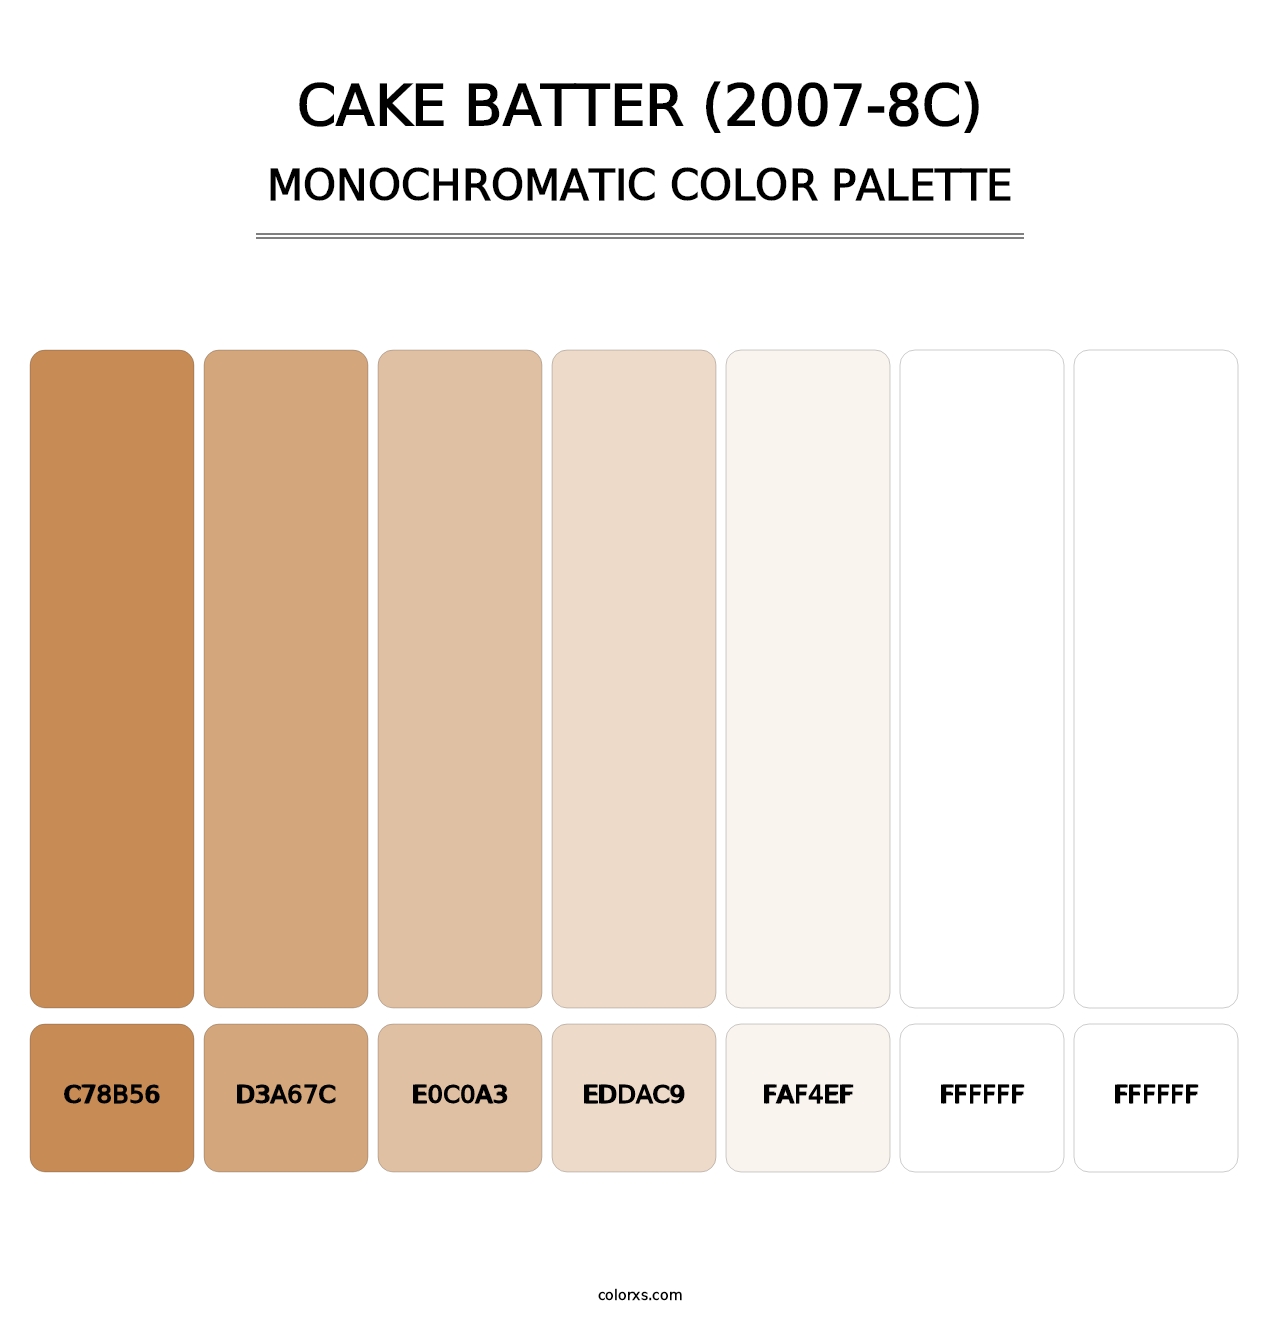 Cake Batter (2007-8C) - Monochromatic Color Palette